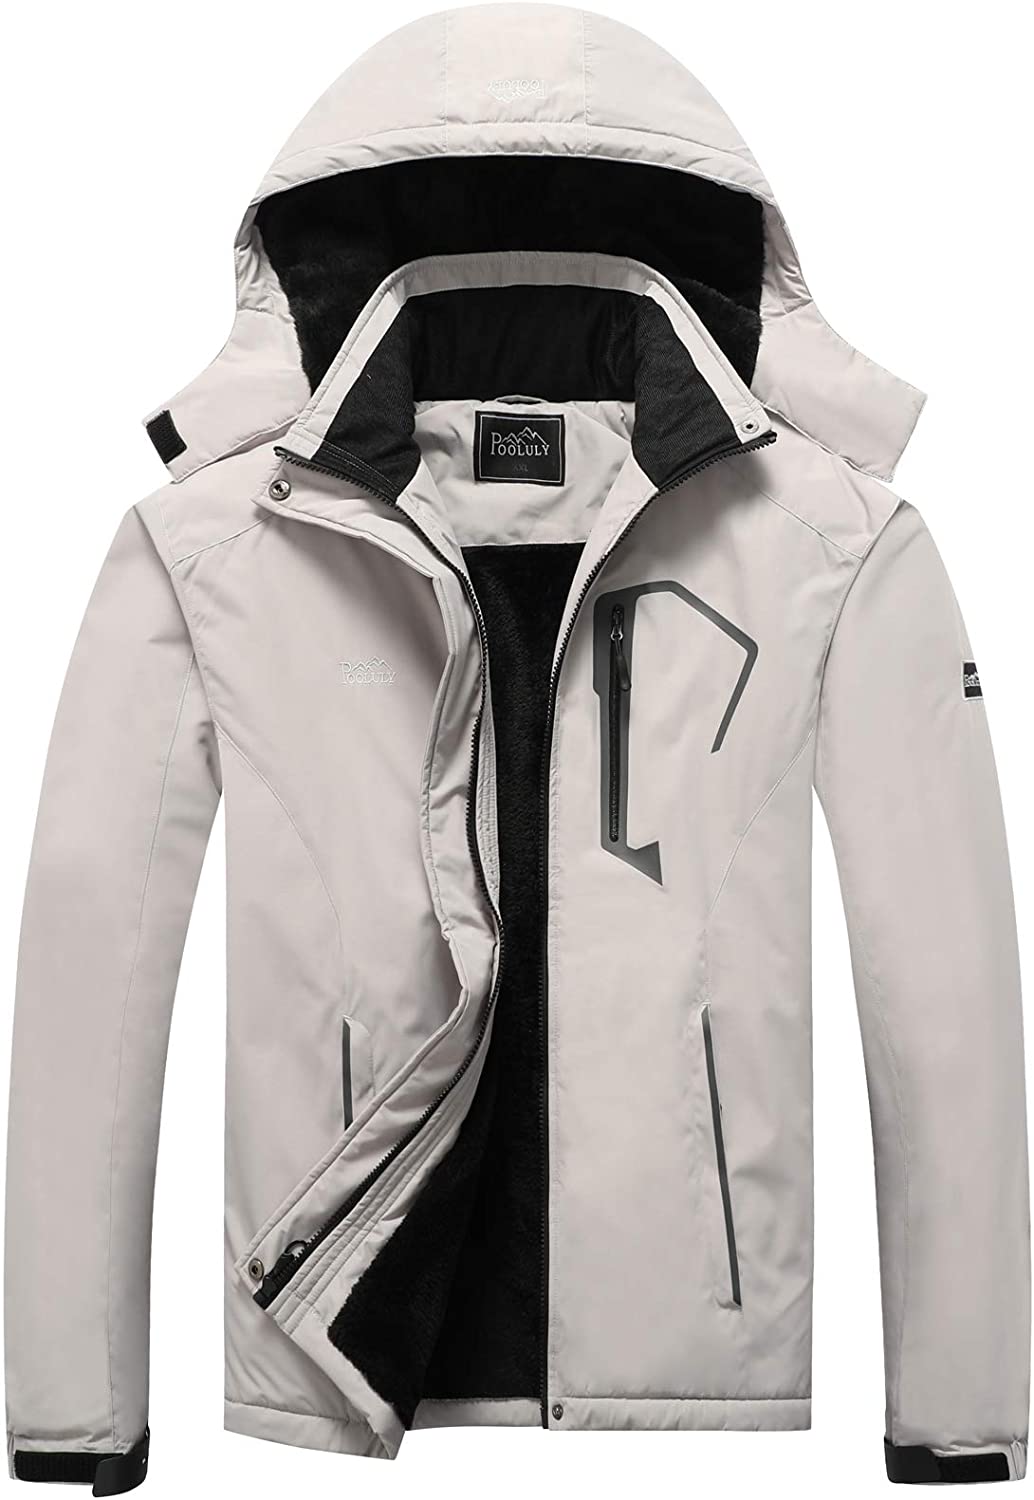 Pooluly Mens Ski Jacket Warm Winter Waterproof Windbreaker Hooded Raincoat Snowboarding Jackets 